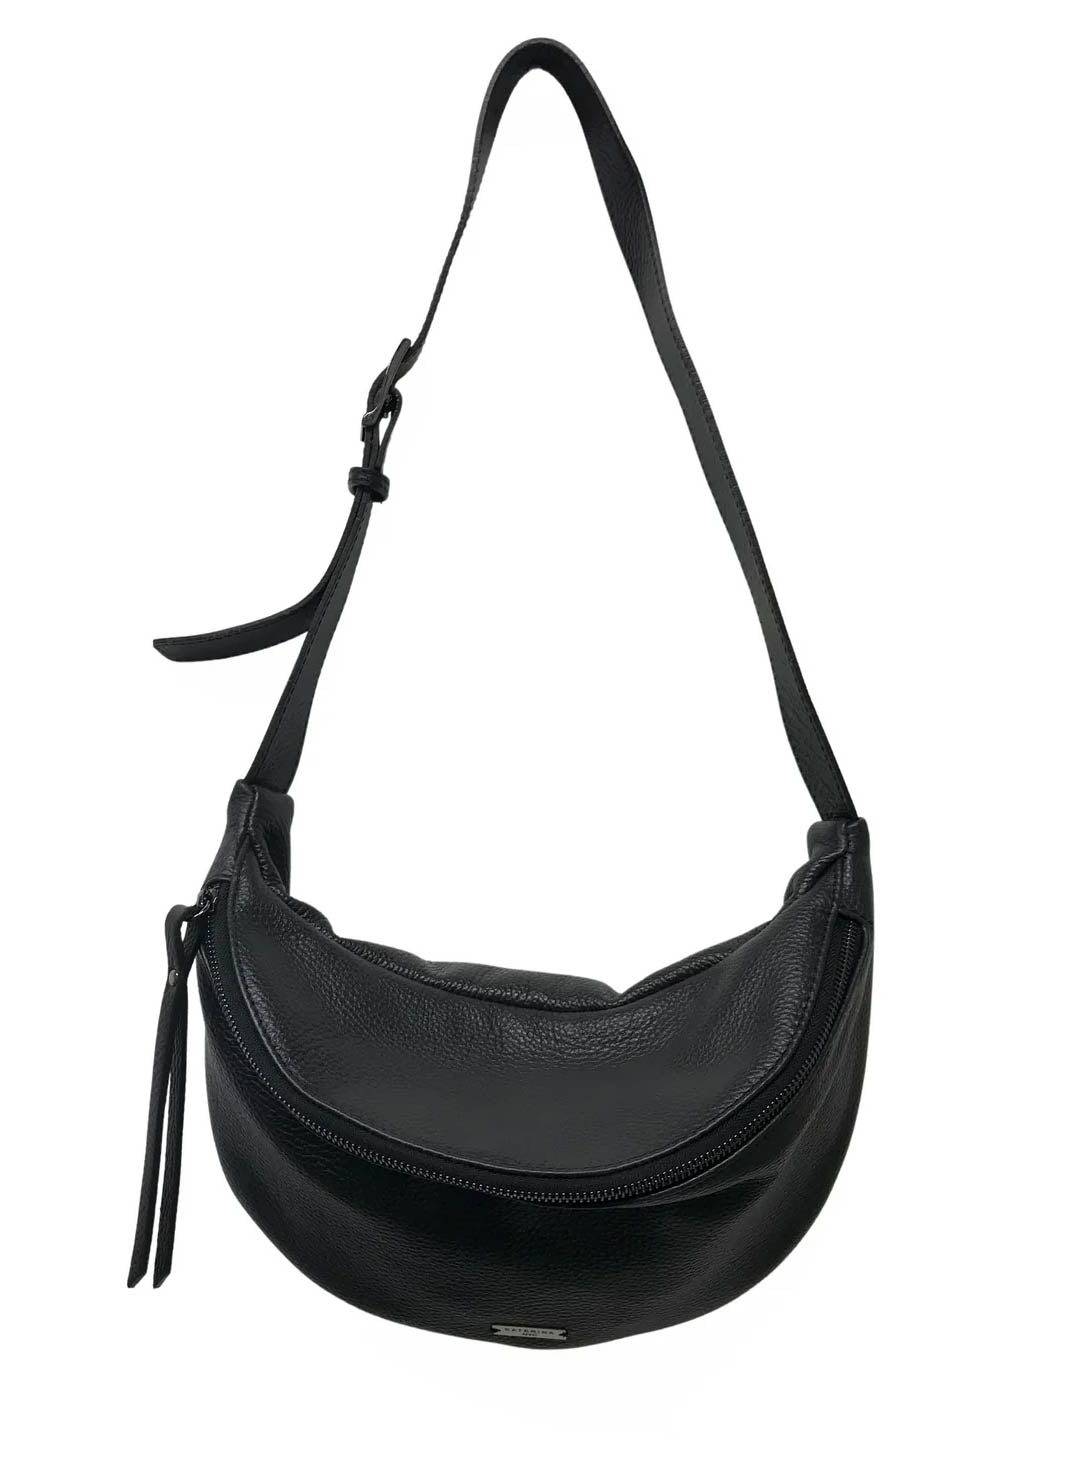 Katerina NYC - Leather Sling Bag - Black - Meg Canada